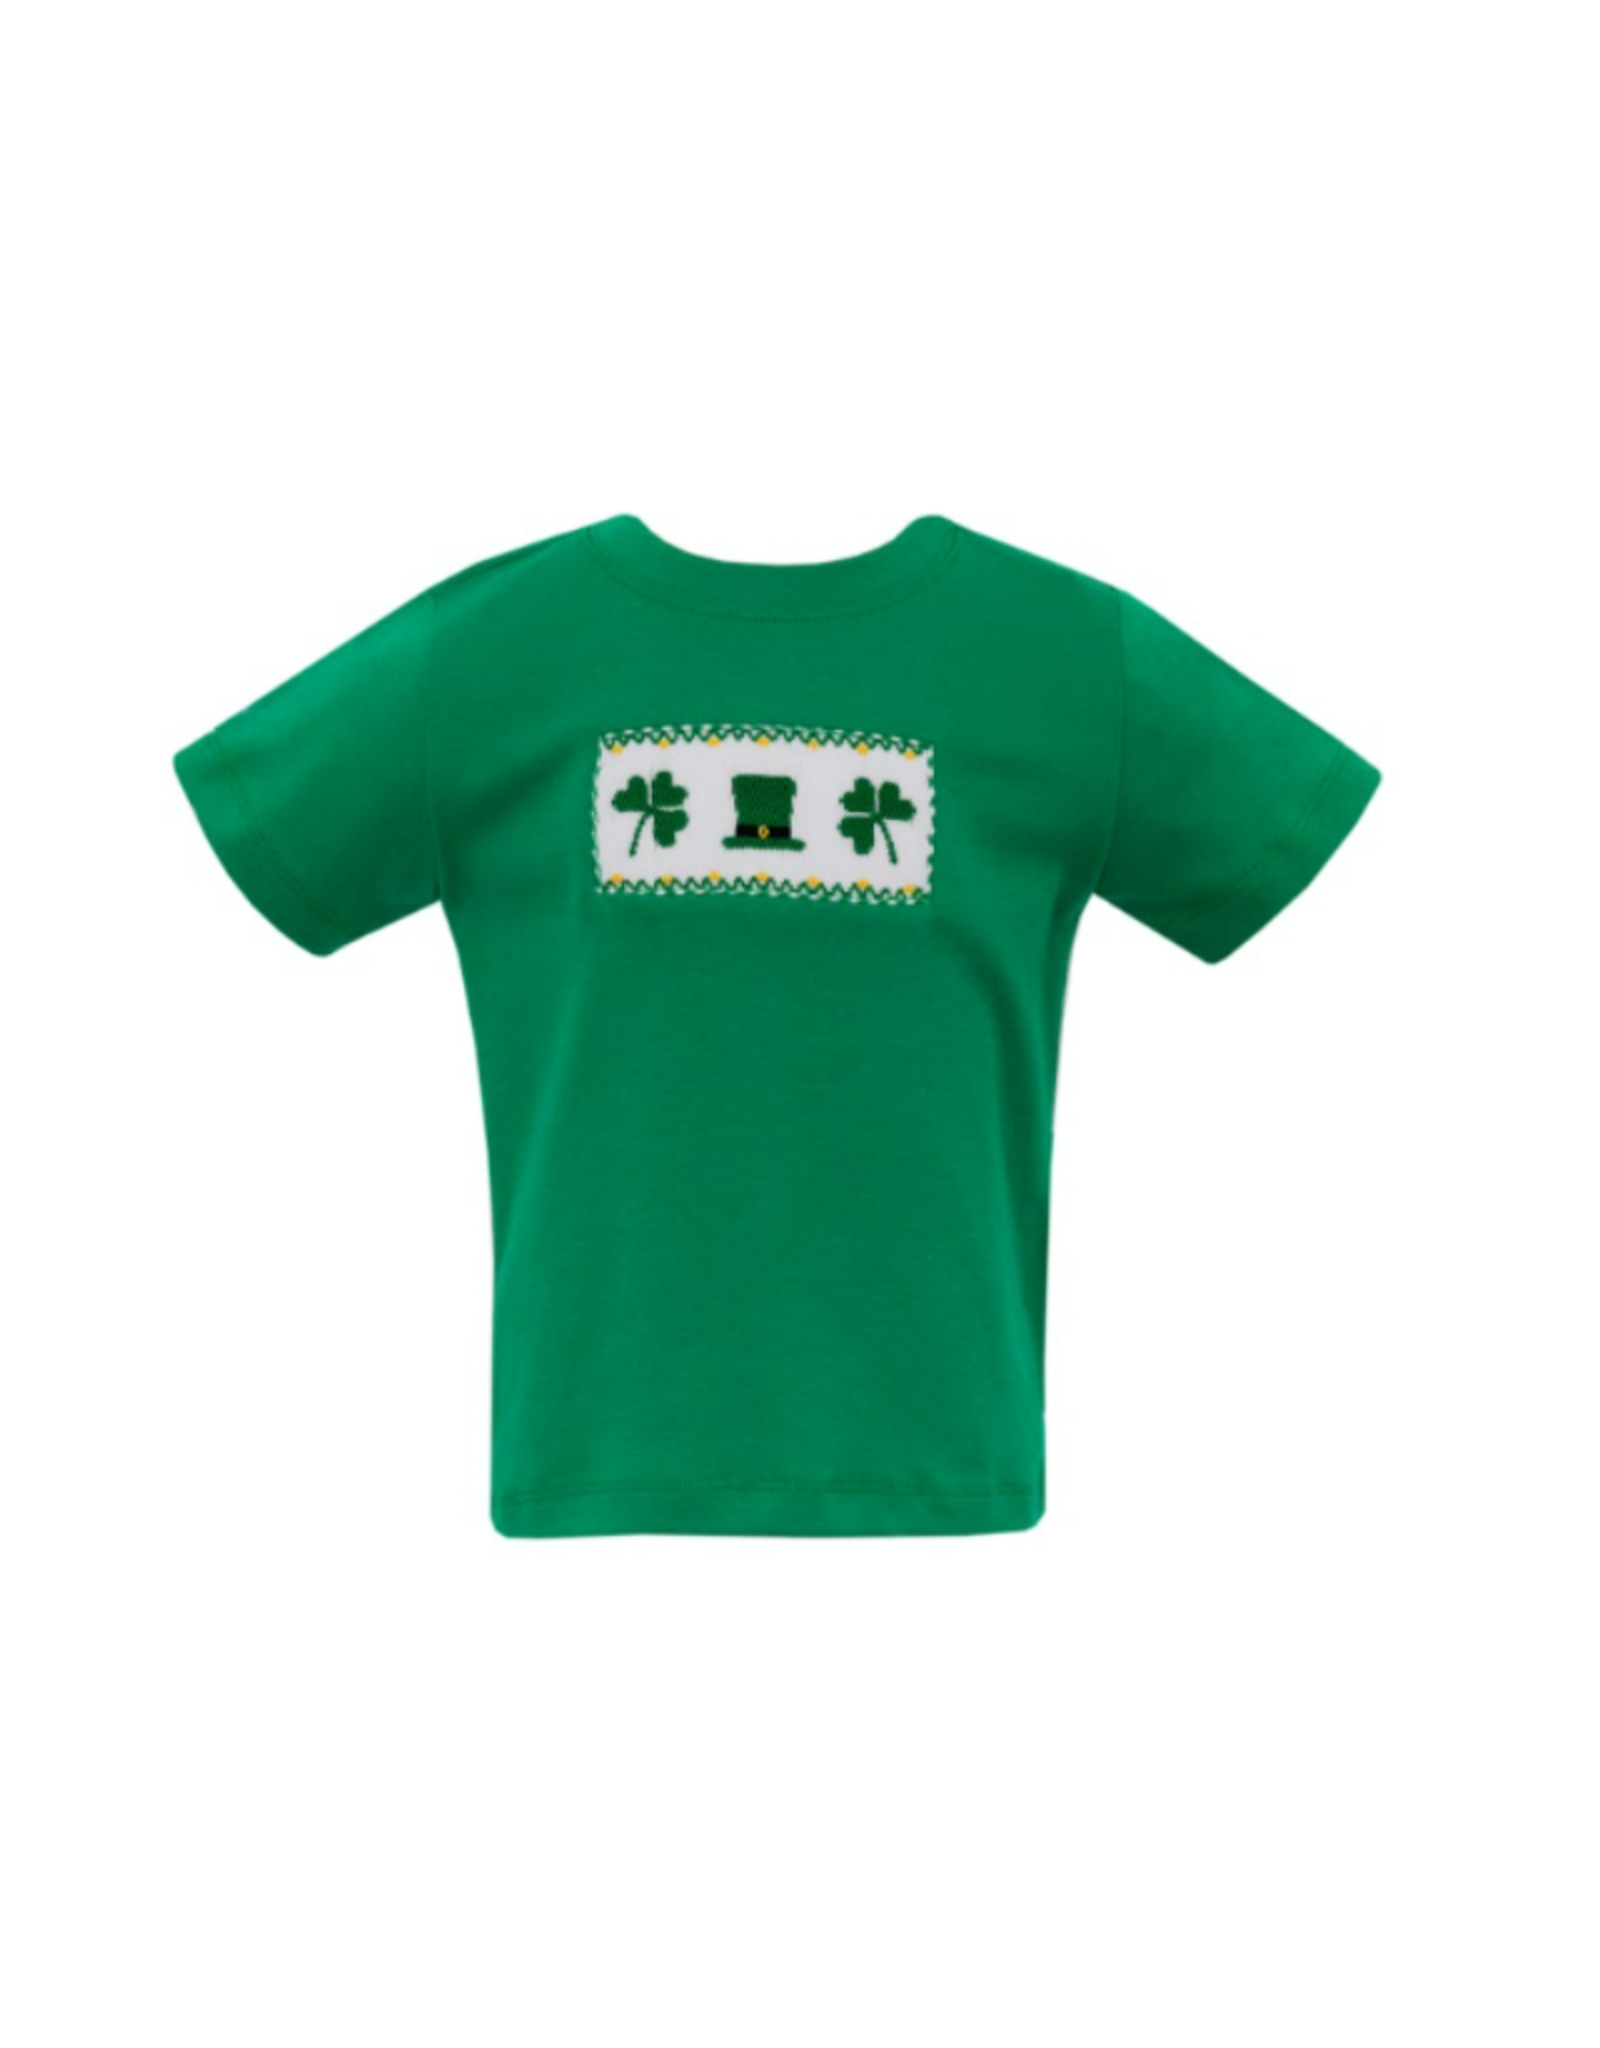 Anavini Green Knit Shamrock Smock Tshirt